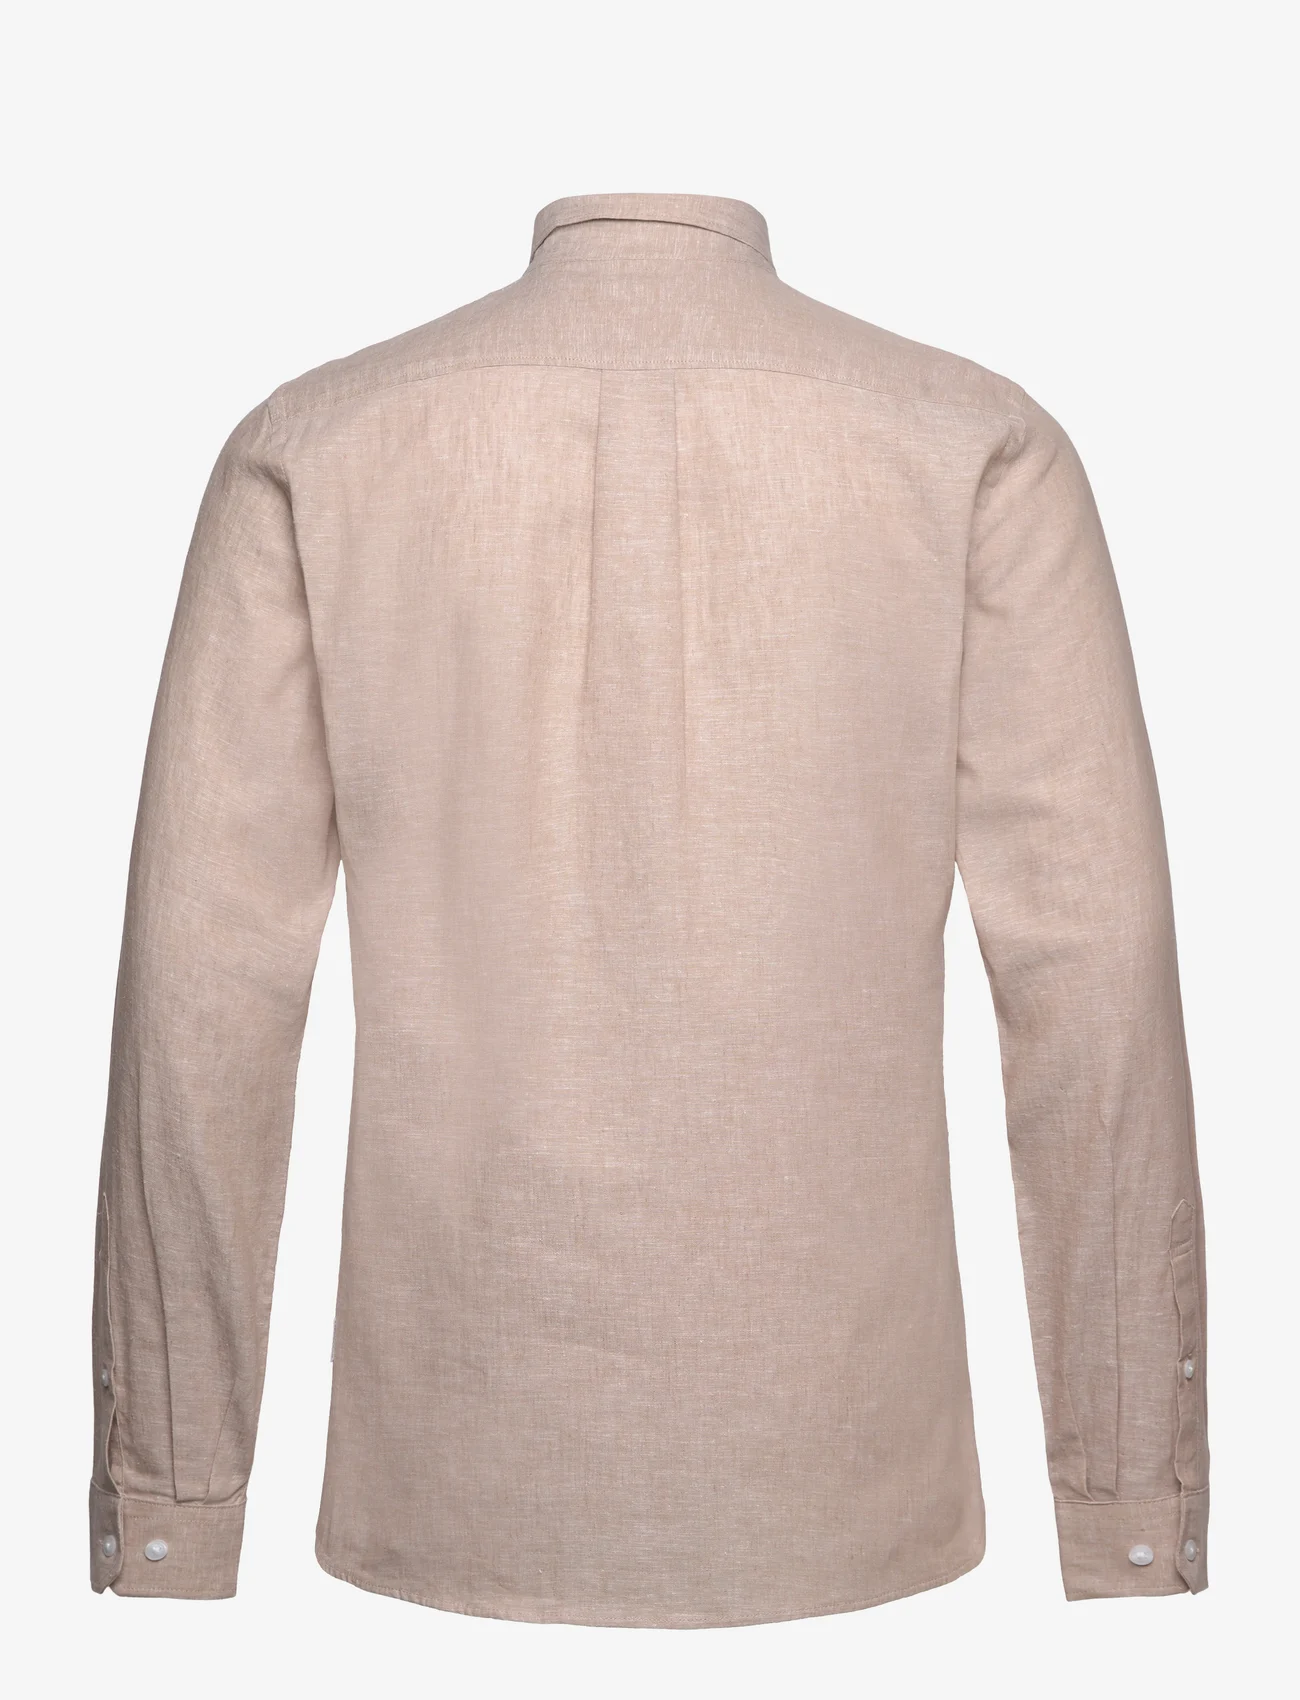 Lindbergh - Linen/cotton shirt L/S - koszule lniane - sand - 1